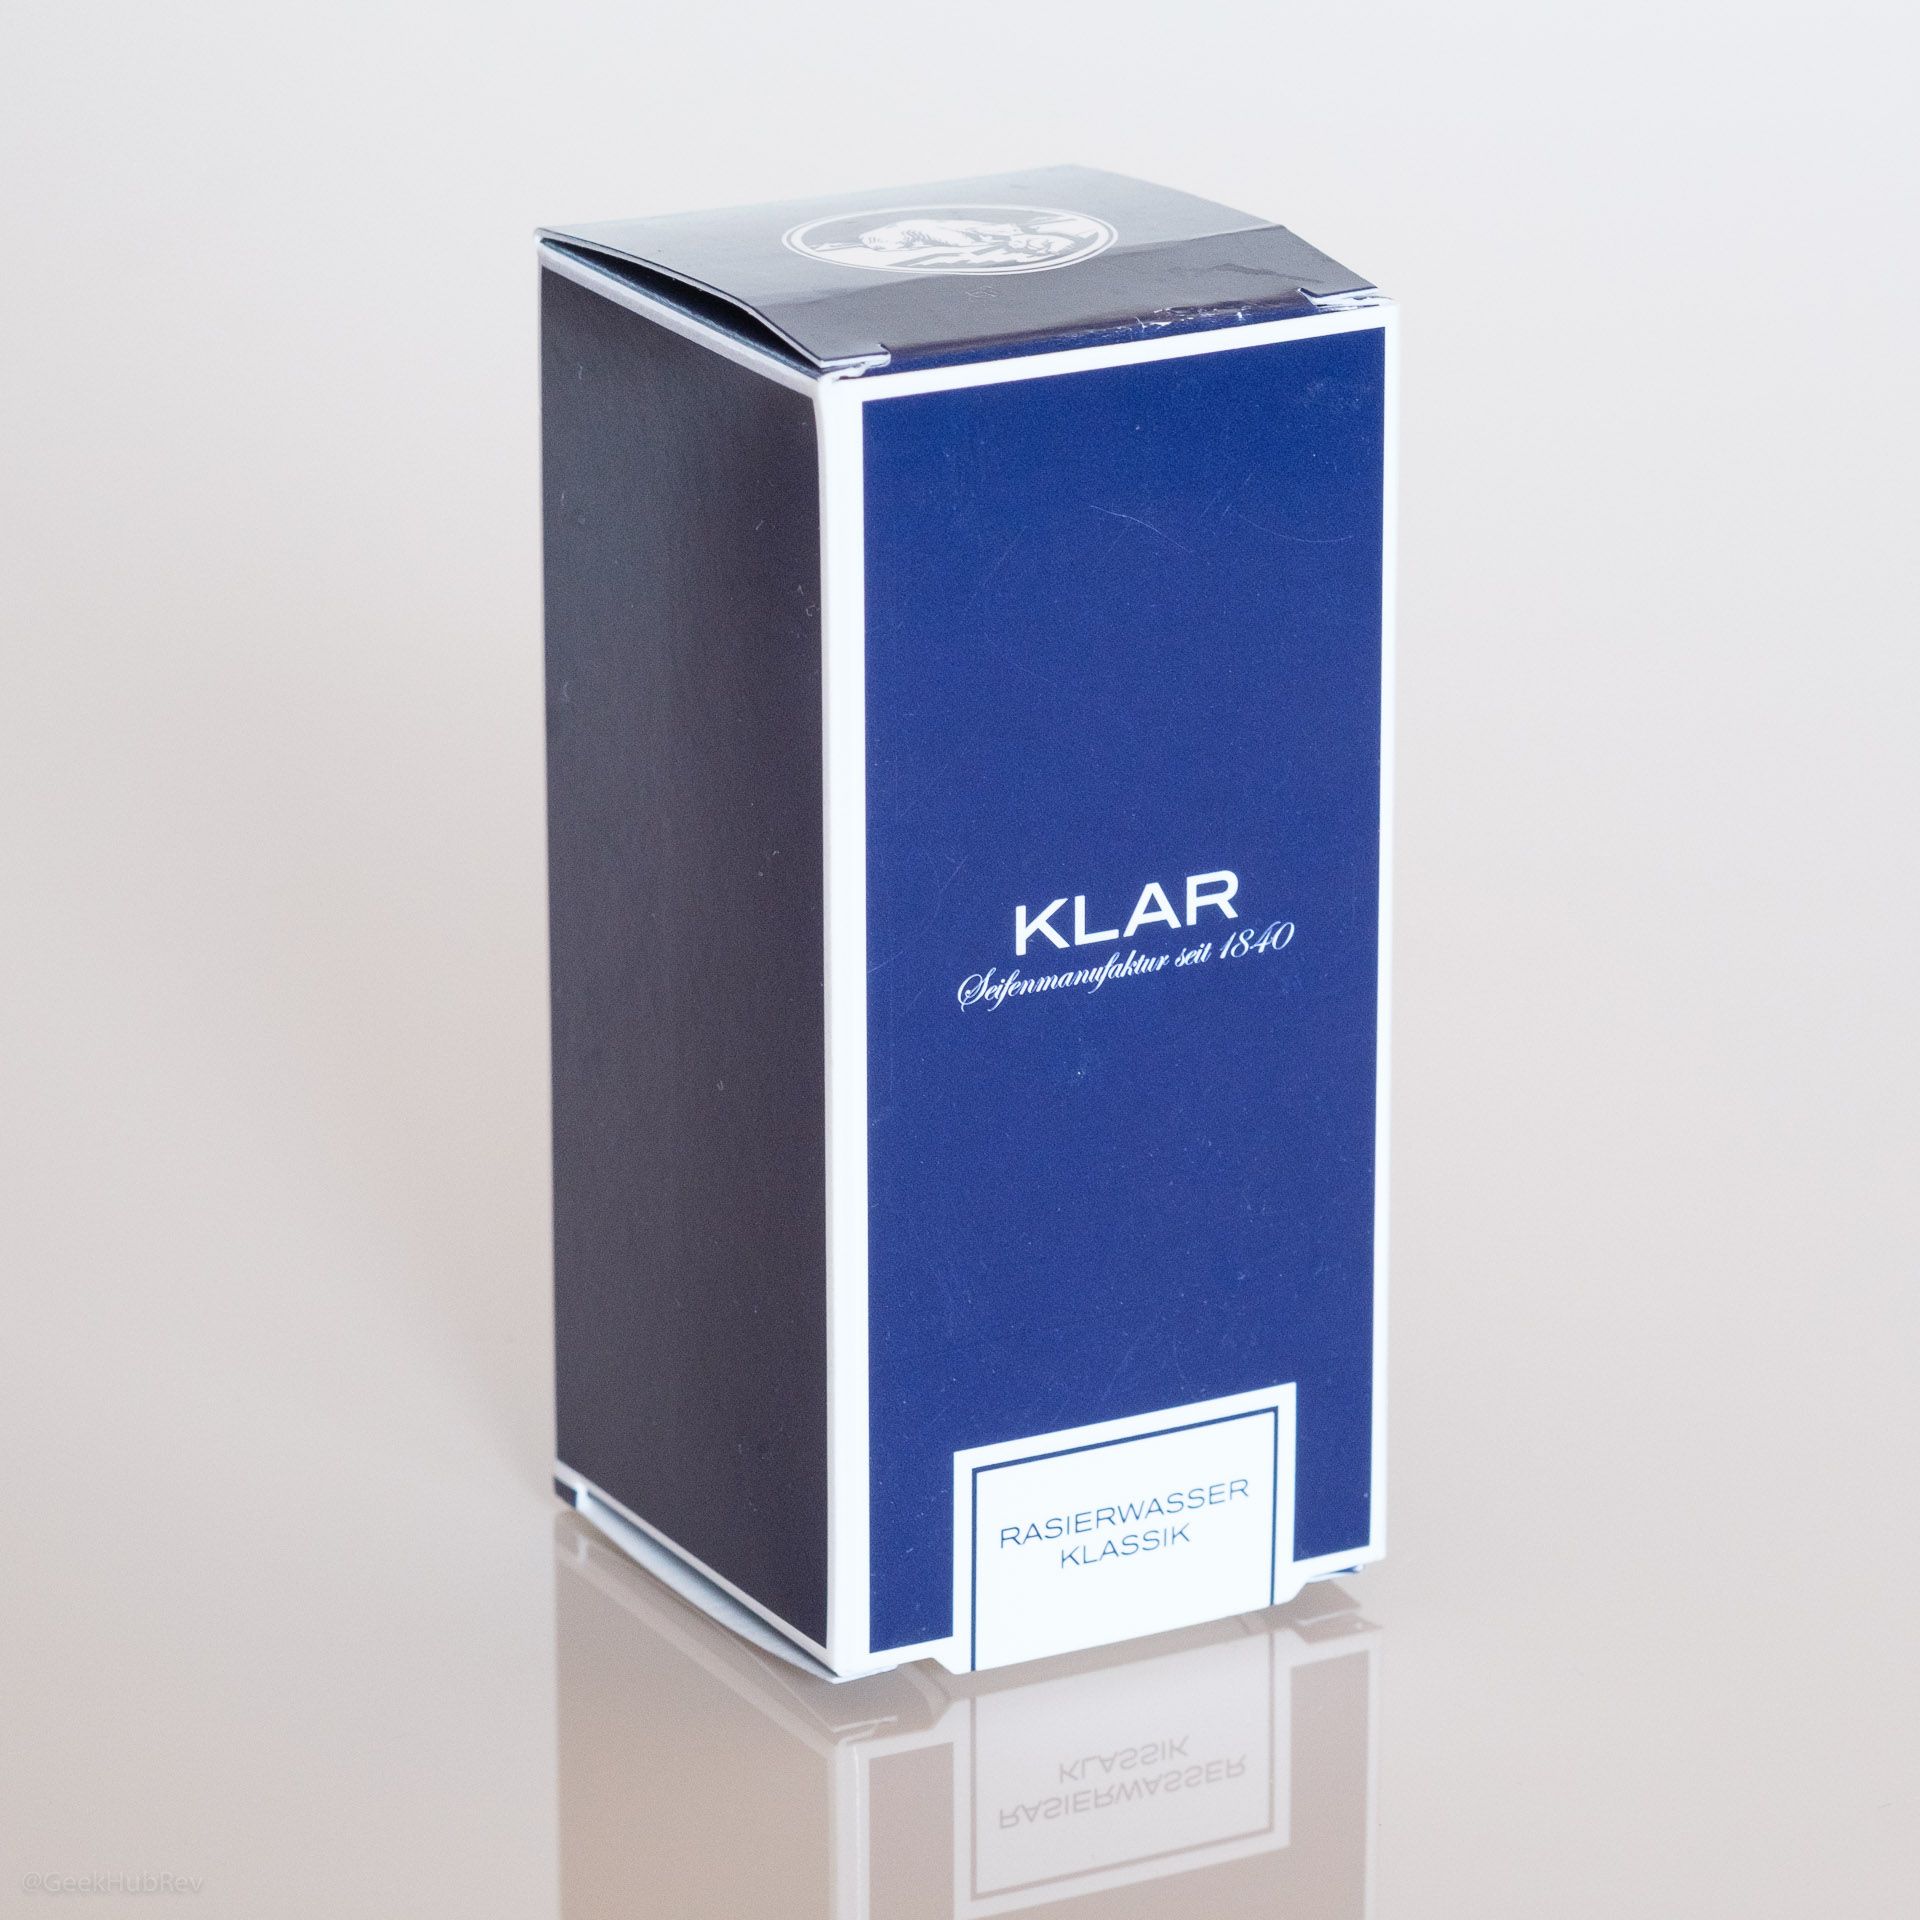 Kartonowe pudełko wody po goleniu Klar Rasierwasser Klassik